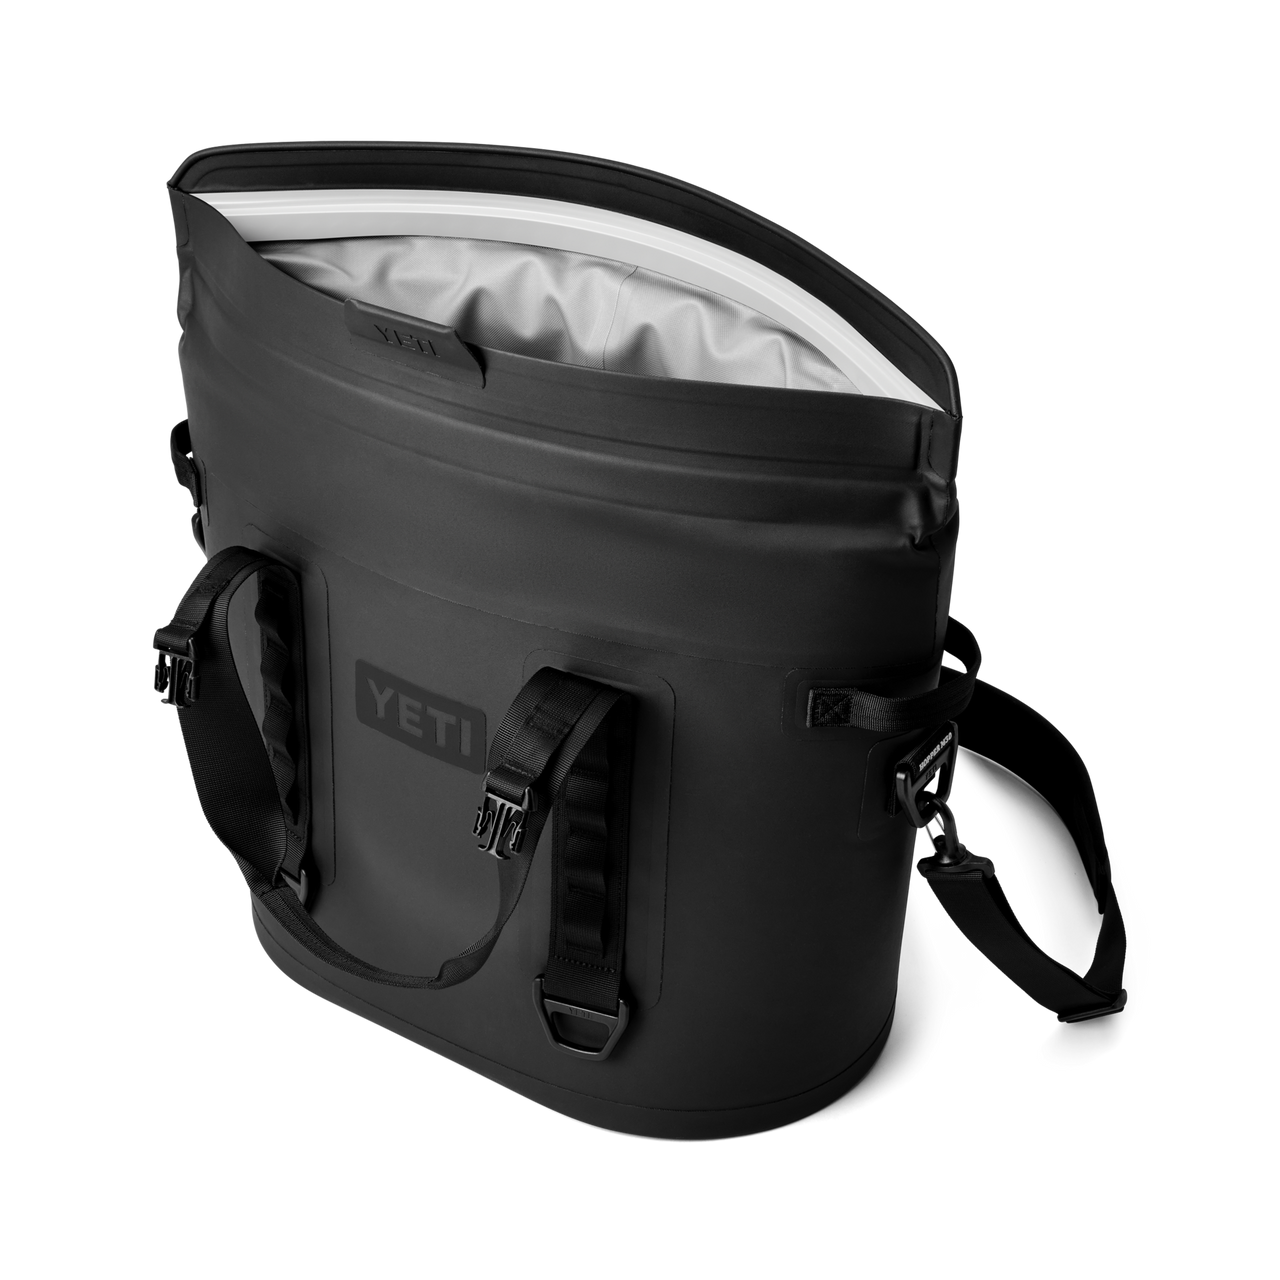 Yeti Hopper M30 Soft Cooler 2.0 - Black